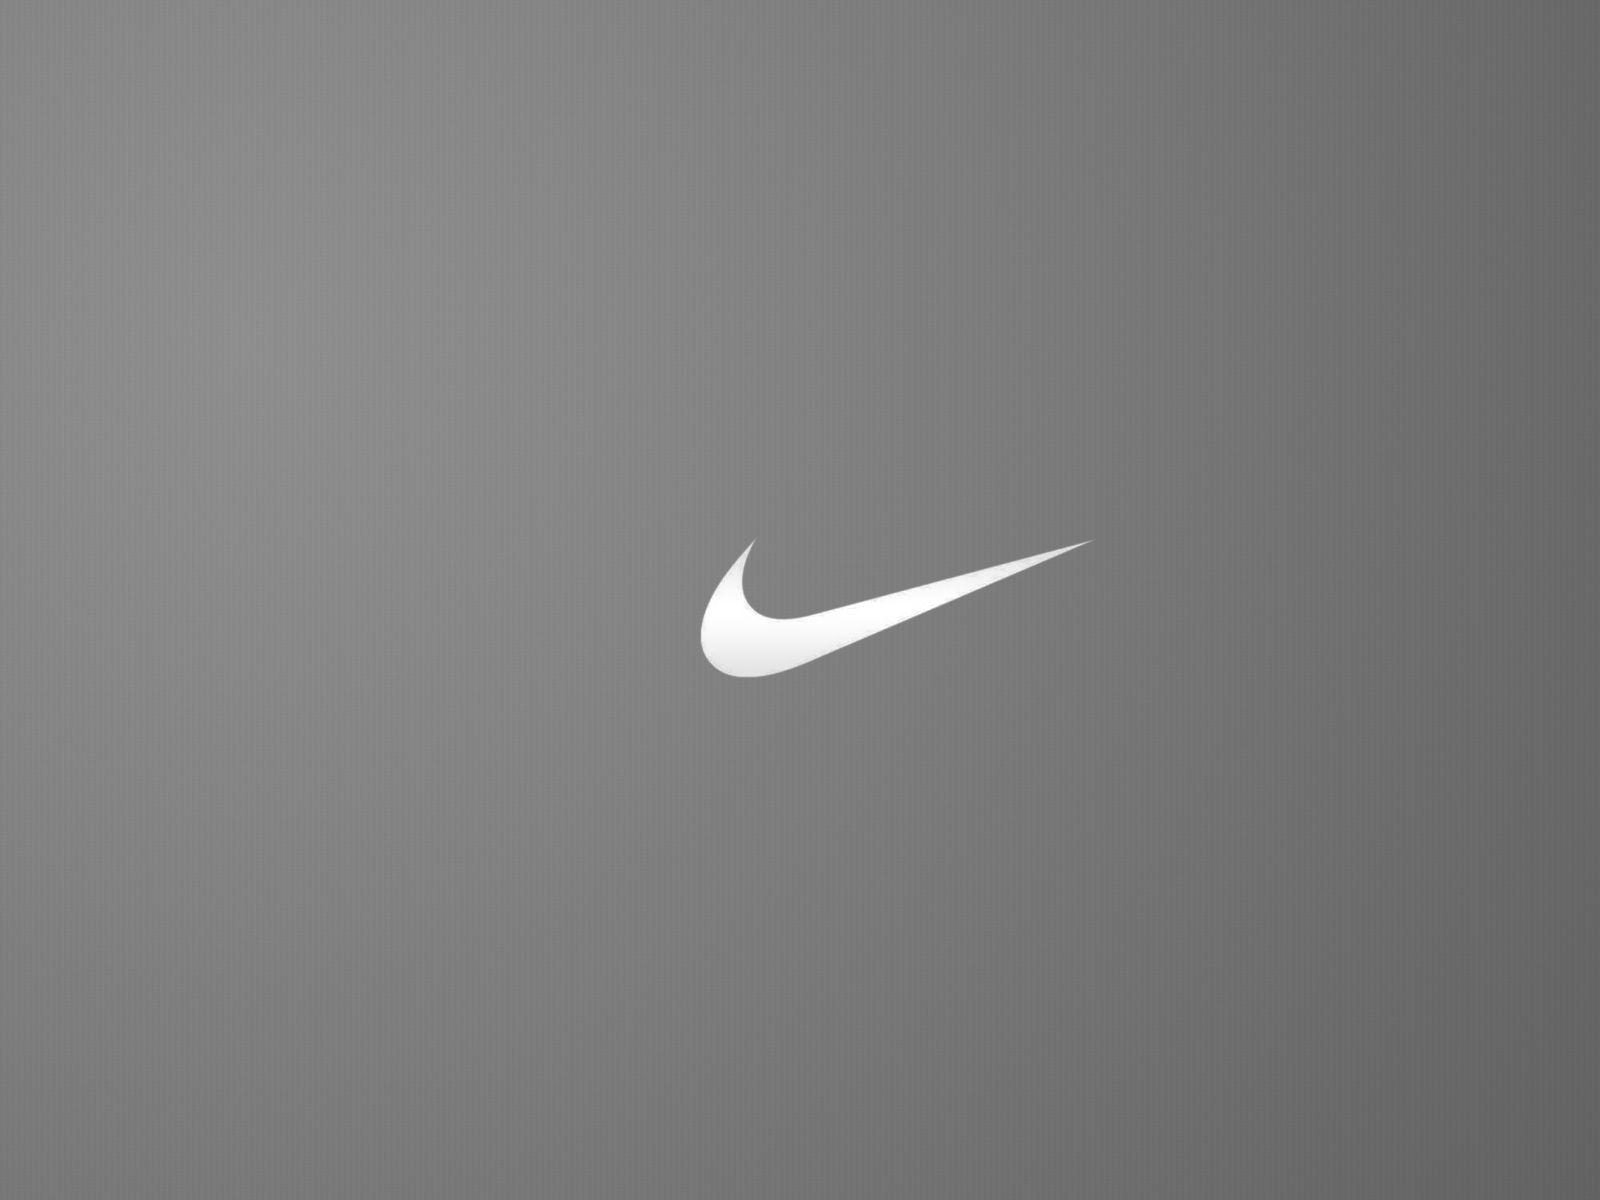 Grey Black Nike Logo - Nike Logo Wallpapers HD free download | PixelsTalk.Net